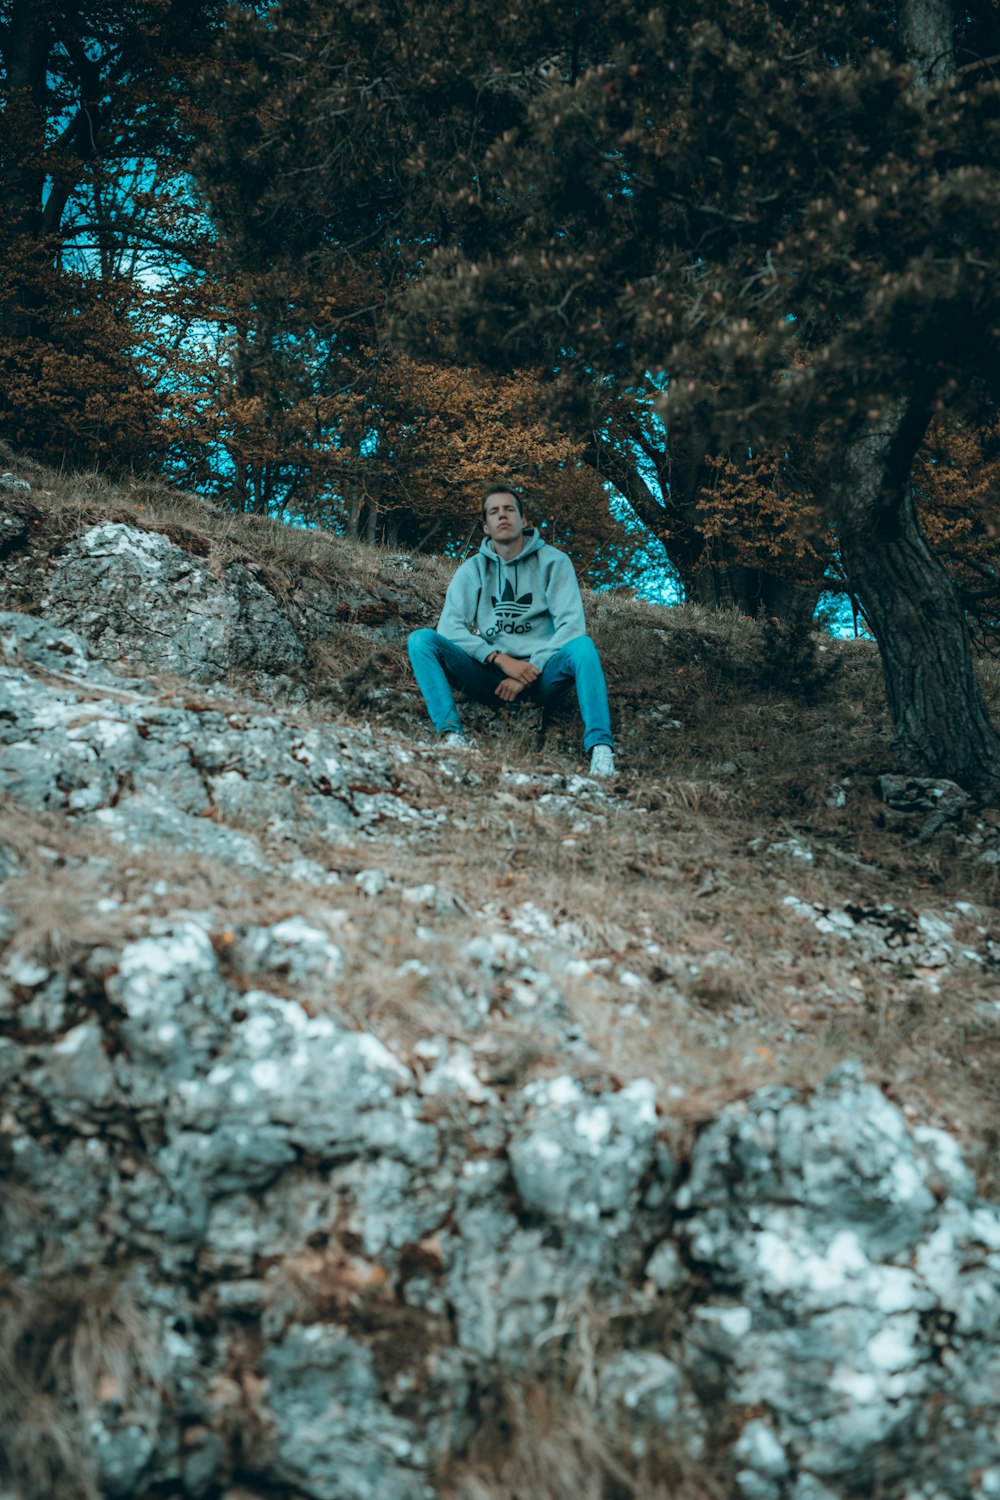 man in gray hoodie sitting on gray rock